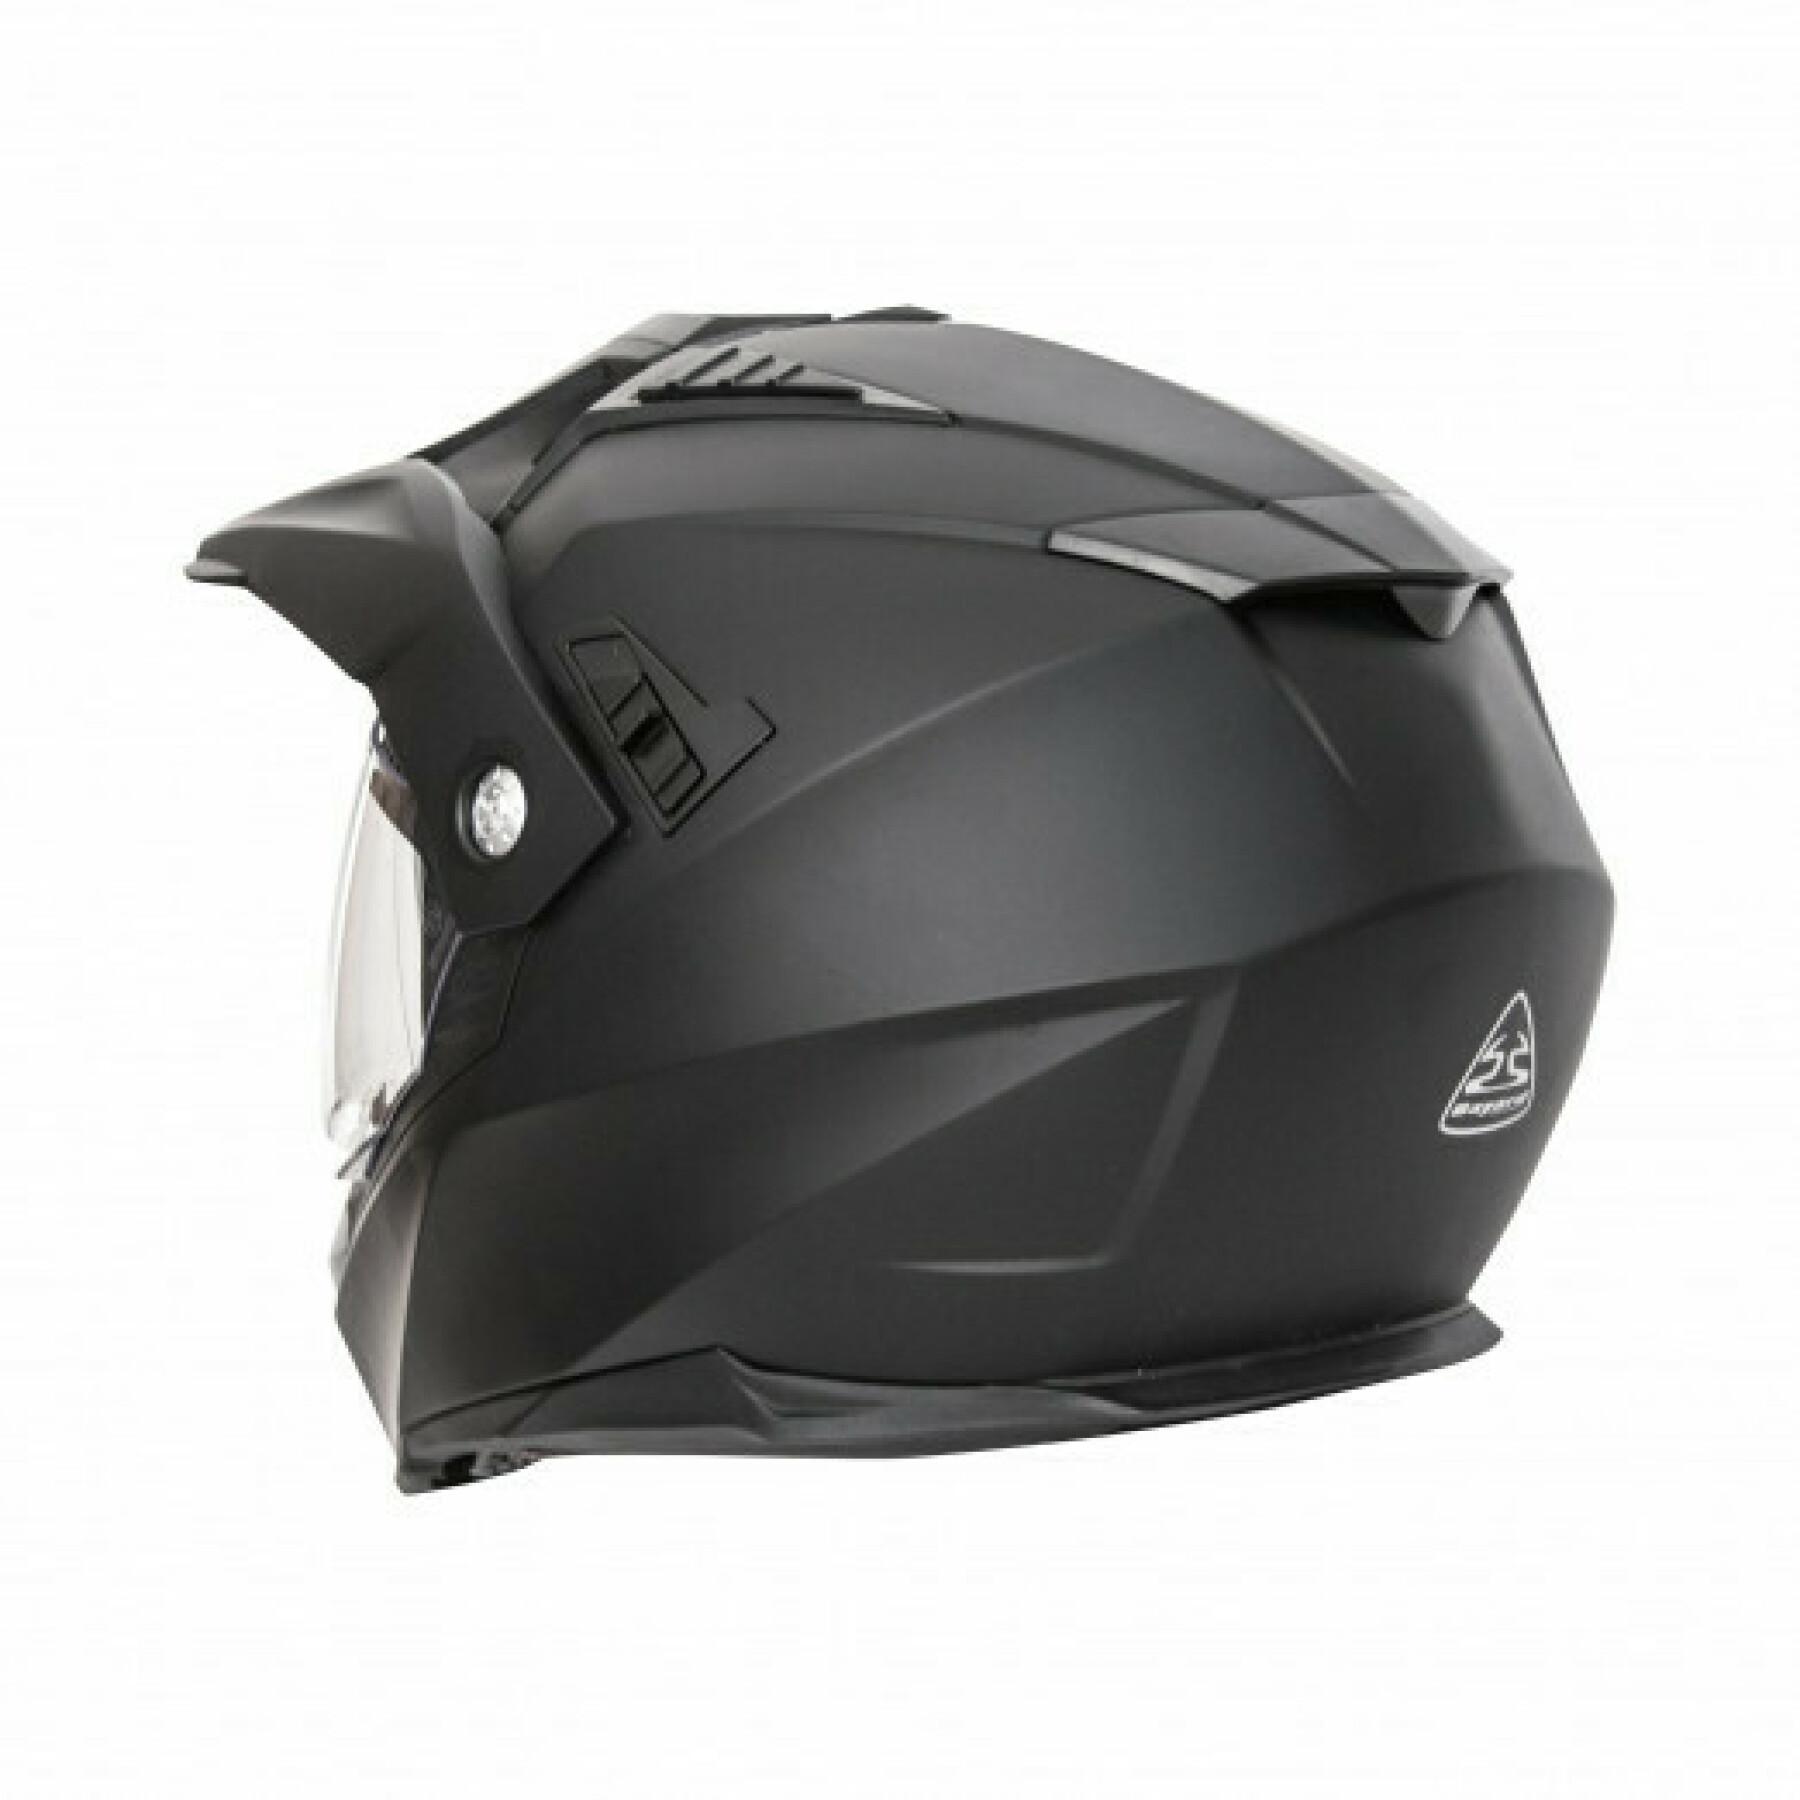 Full face motorcycle helmet Bayard cx-50 s